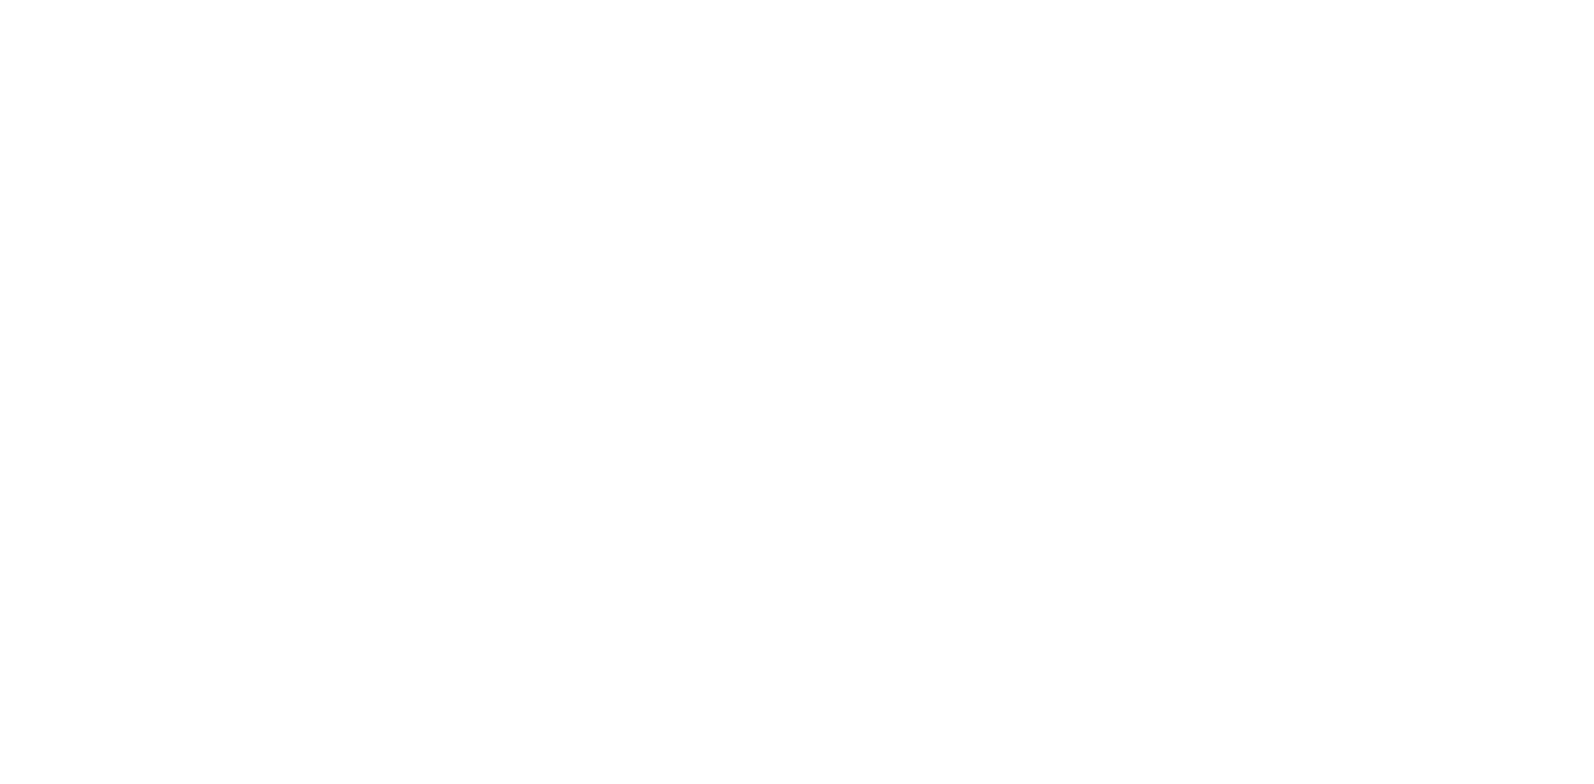 DCP Midstream logo large for dark backgrounds (transparent PNG)